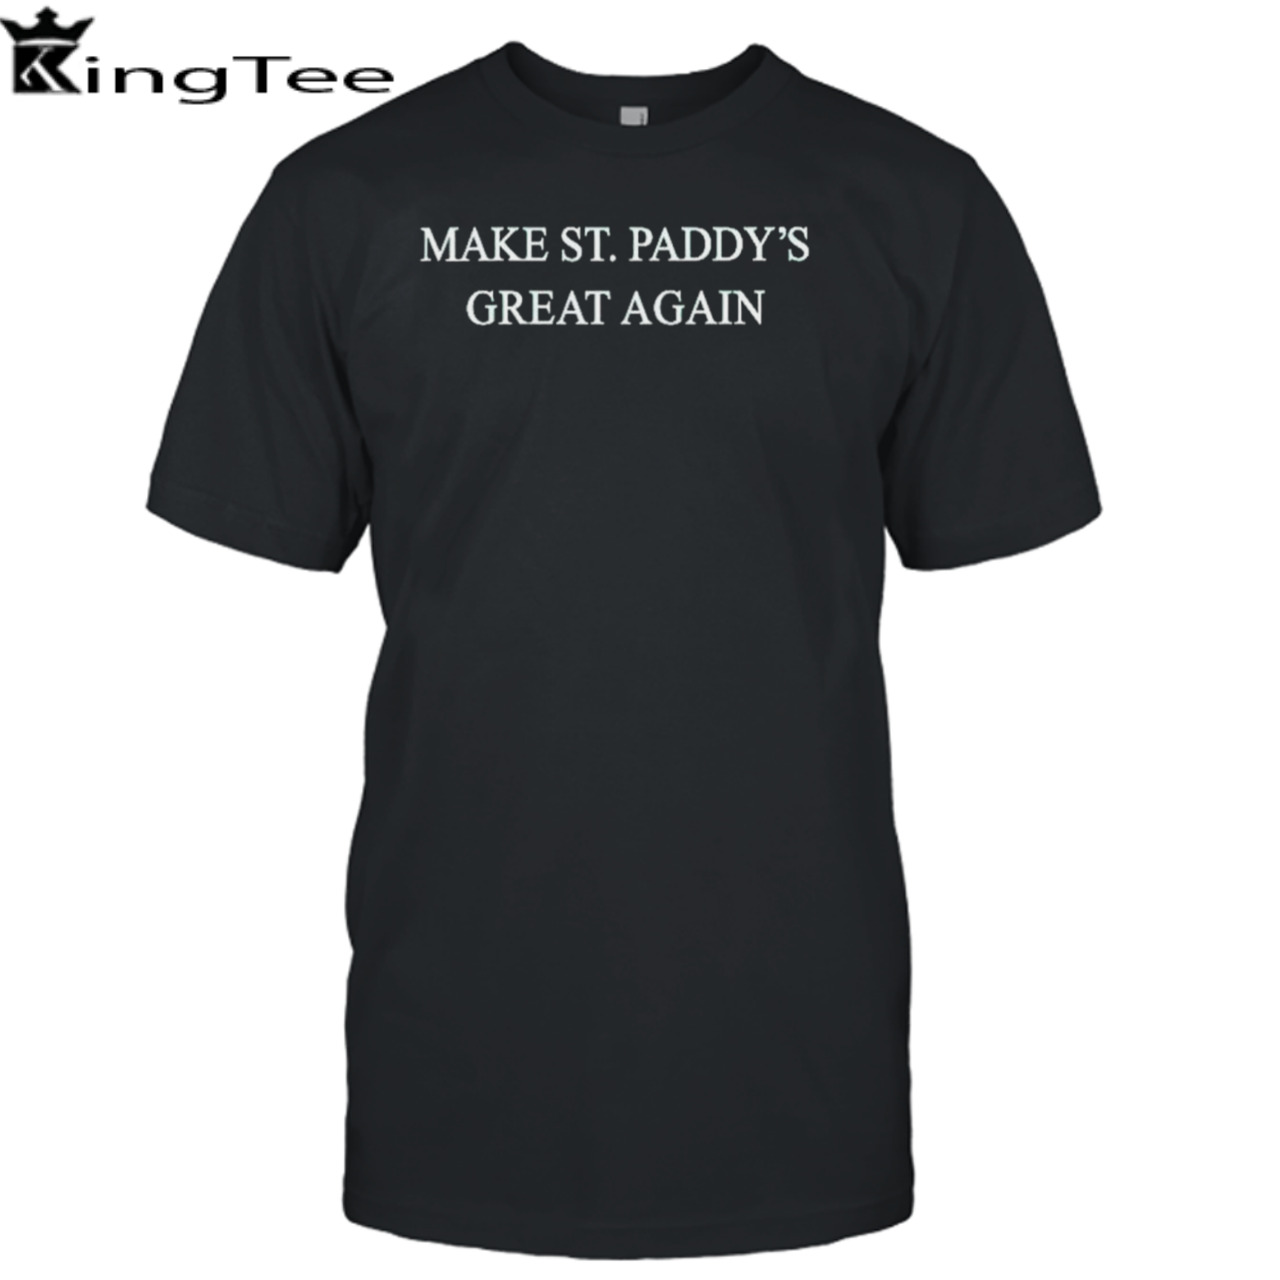 Make St. Paddy’s great again shirt